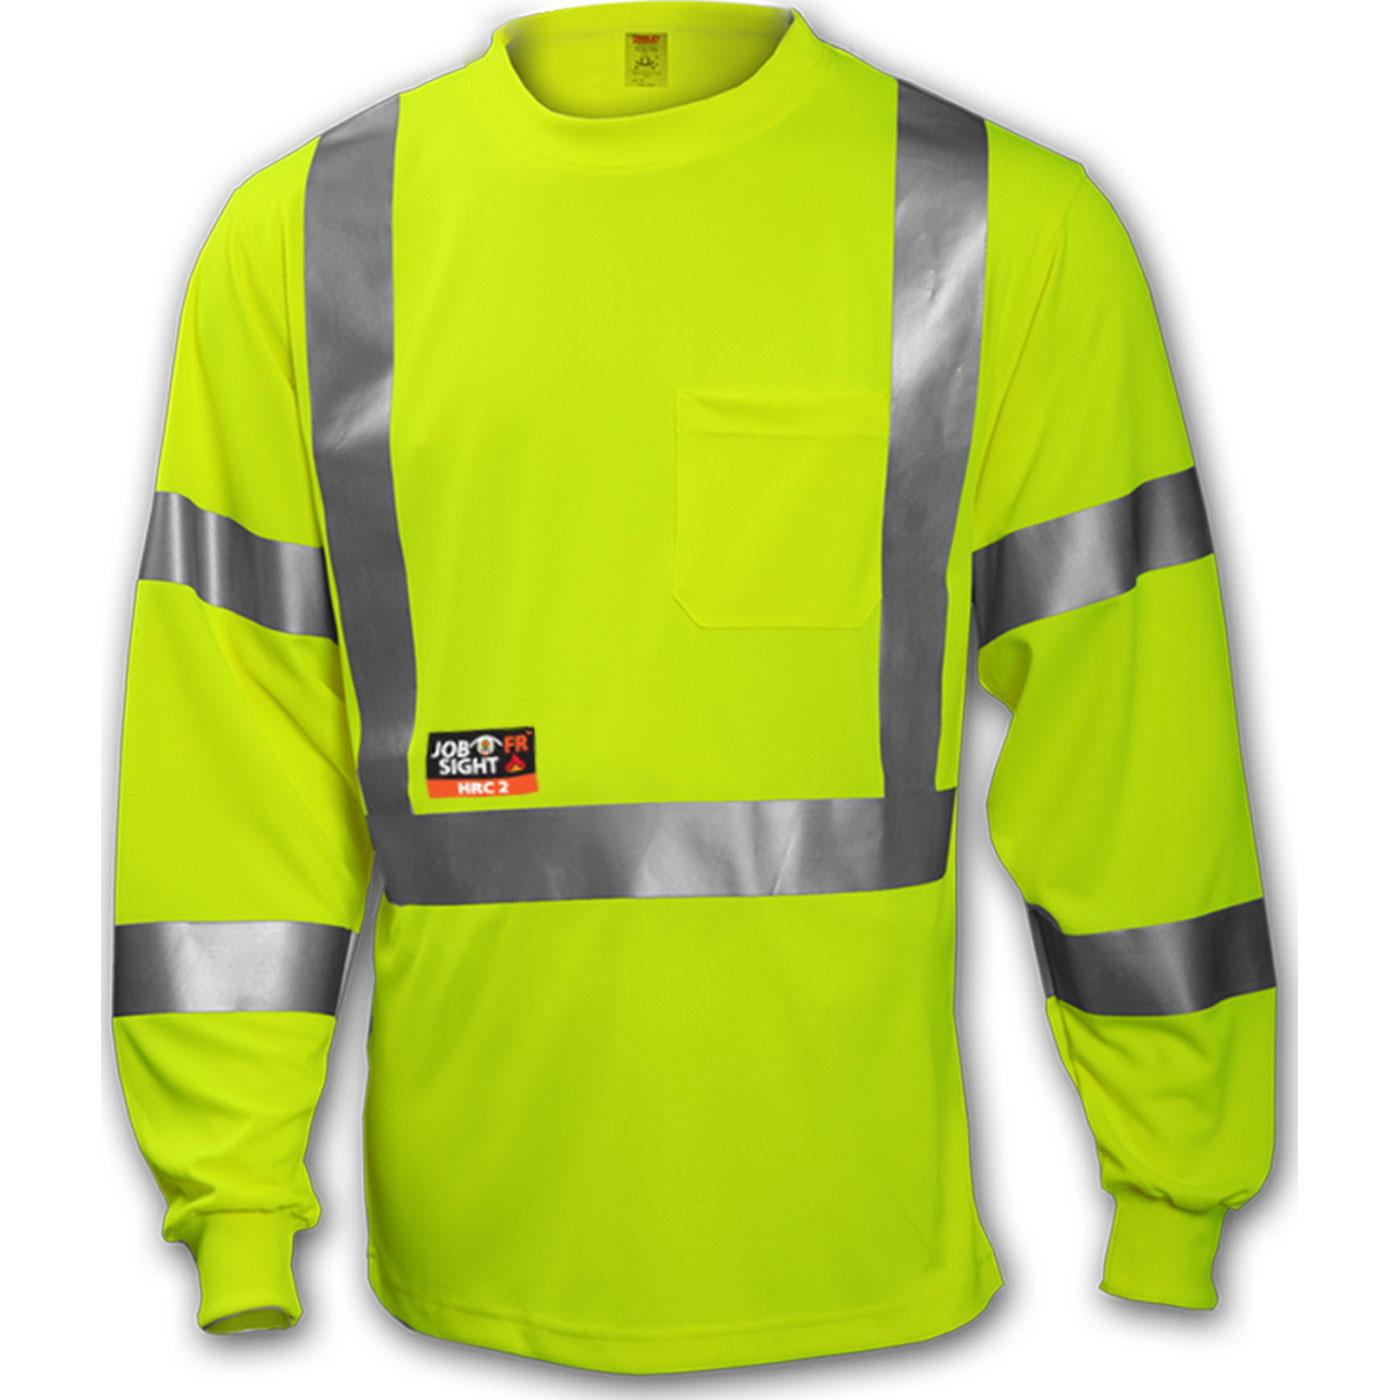 Unisex Class 3 Fire-Resistant T-Shirt, Tingley Job Sight